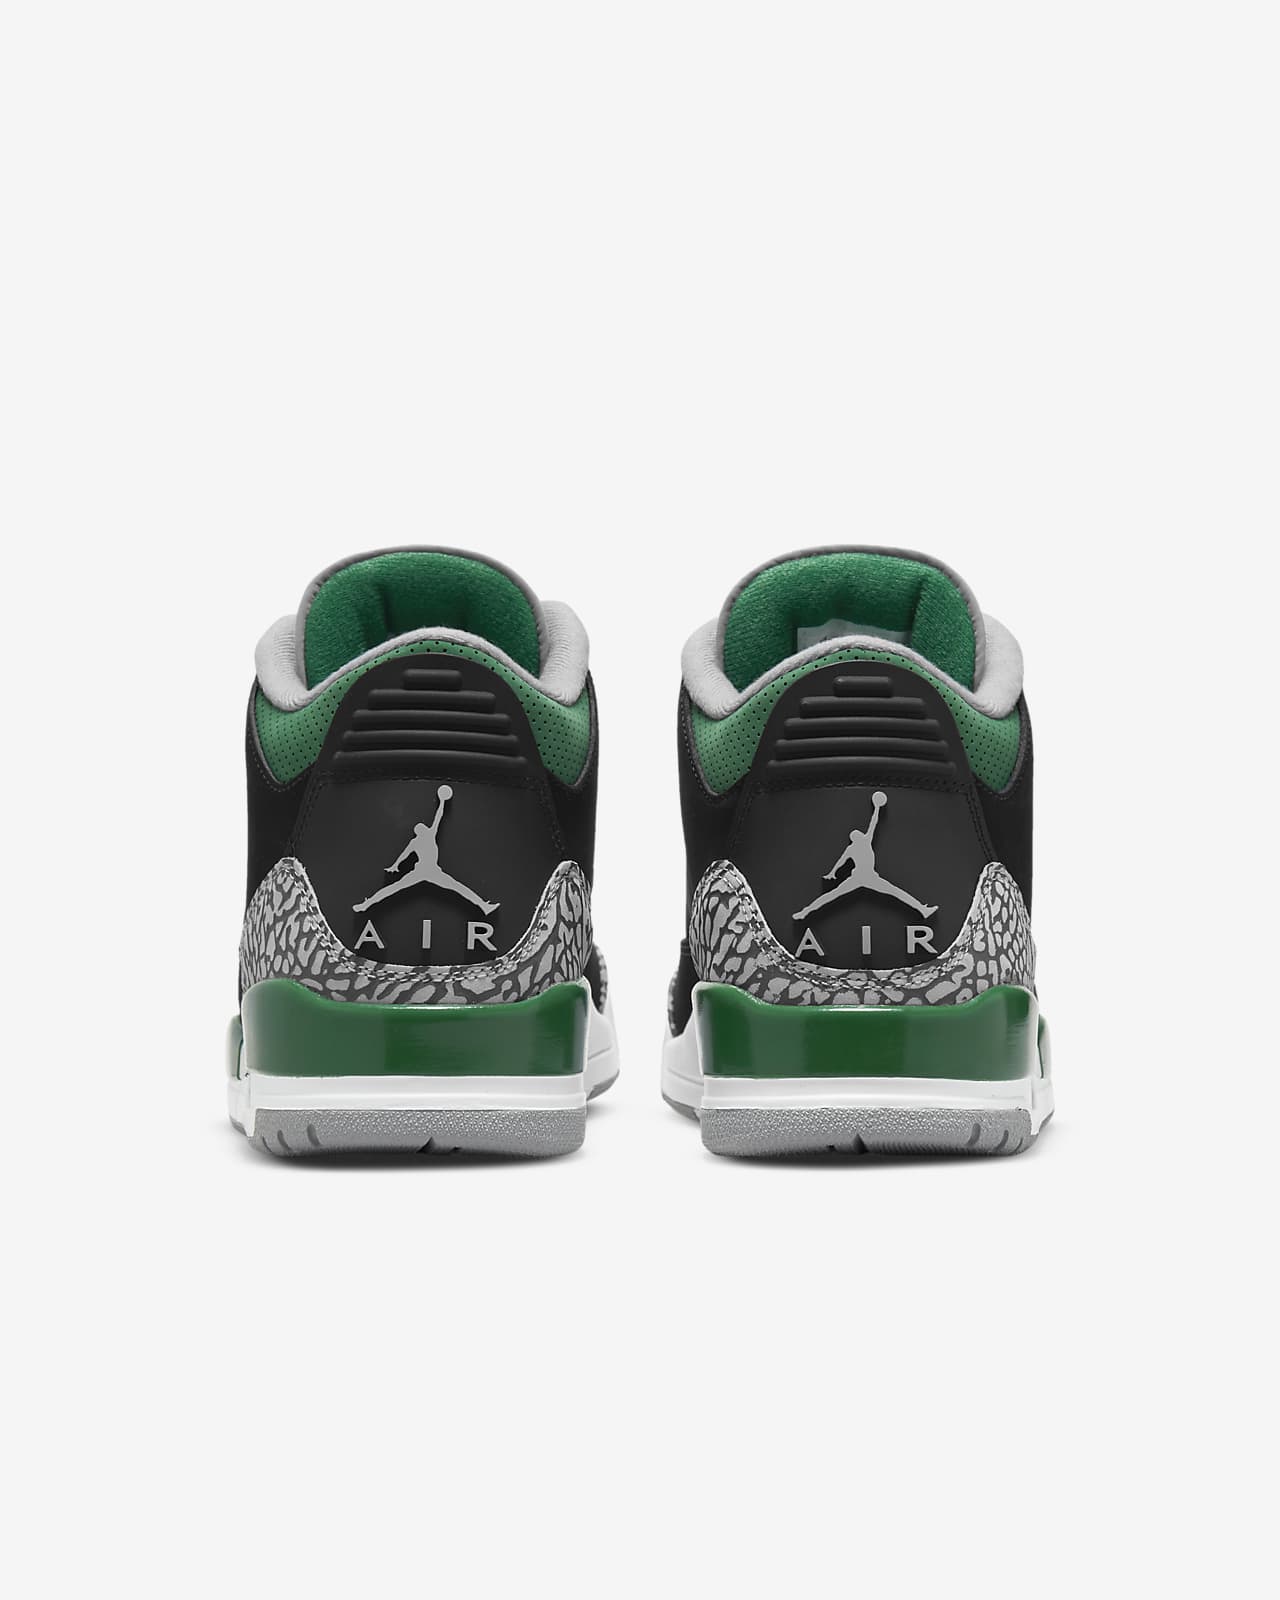 Air Jordan 3 Retro Shoes